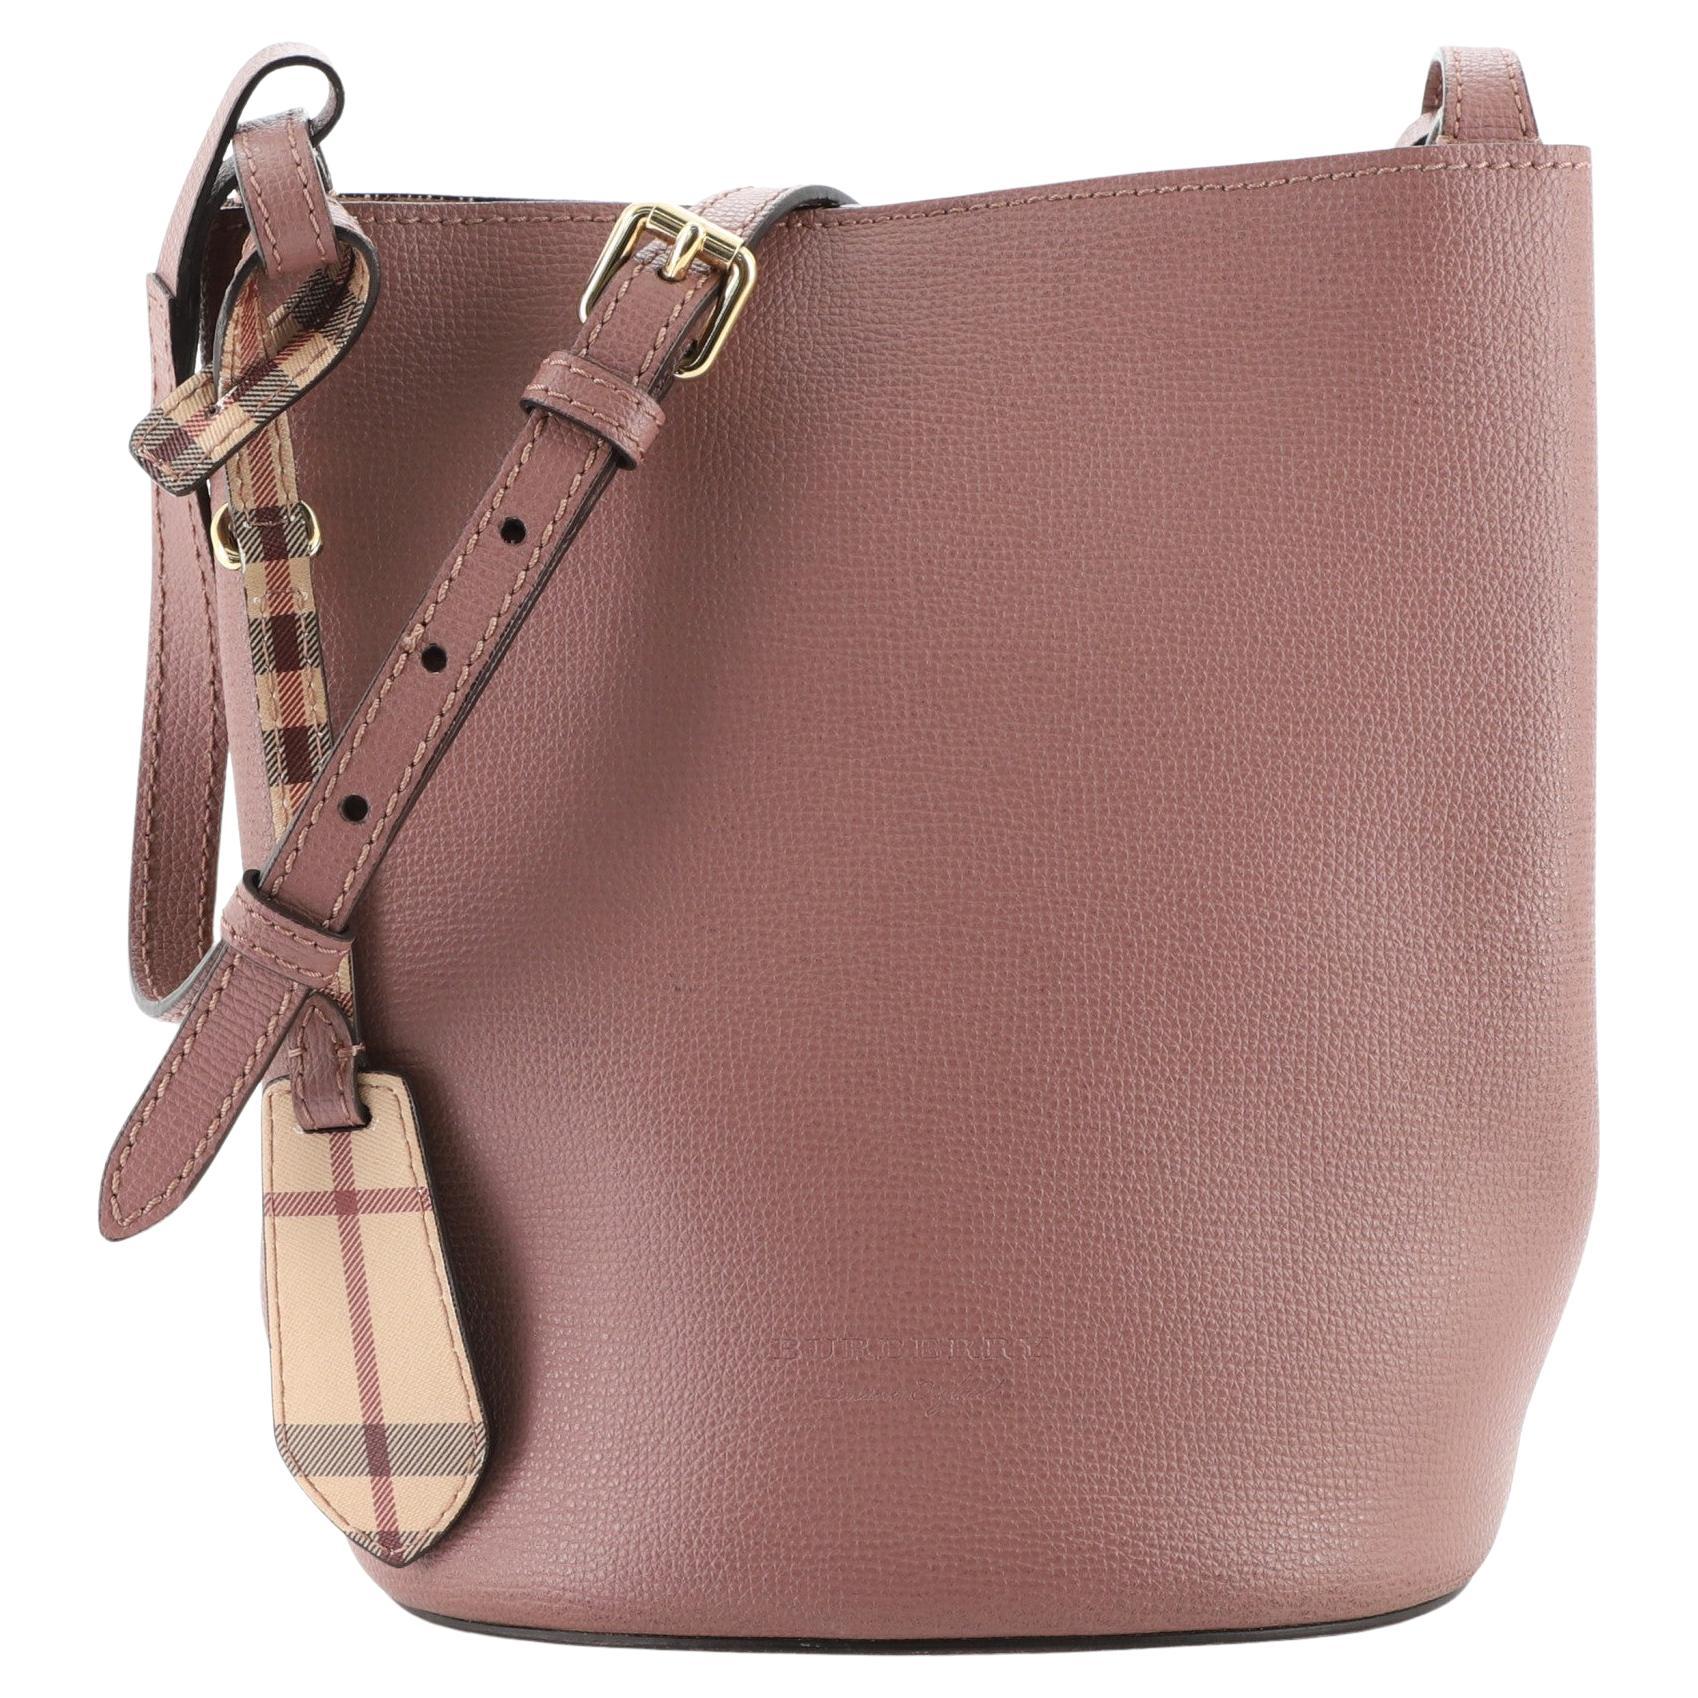 Burberry Lorne Bucket Bag Crossbody Tan Embossed Leather $1350